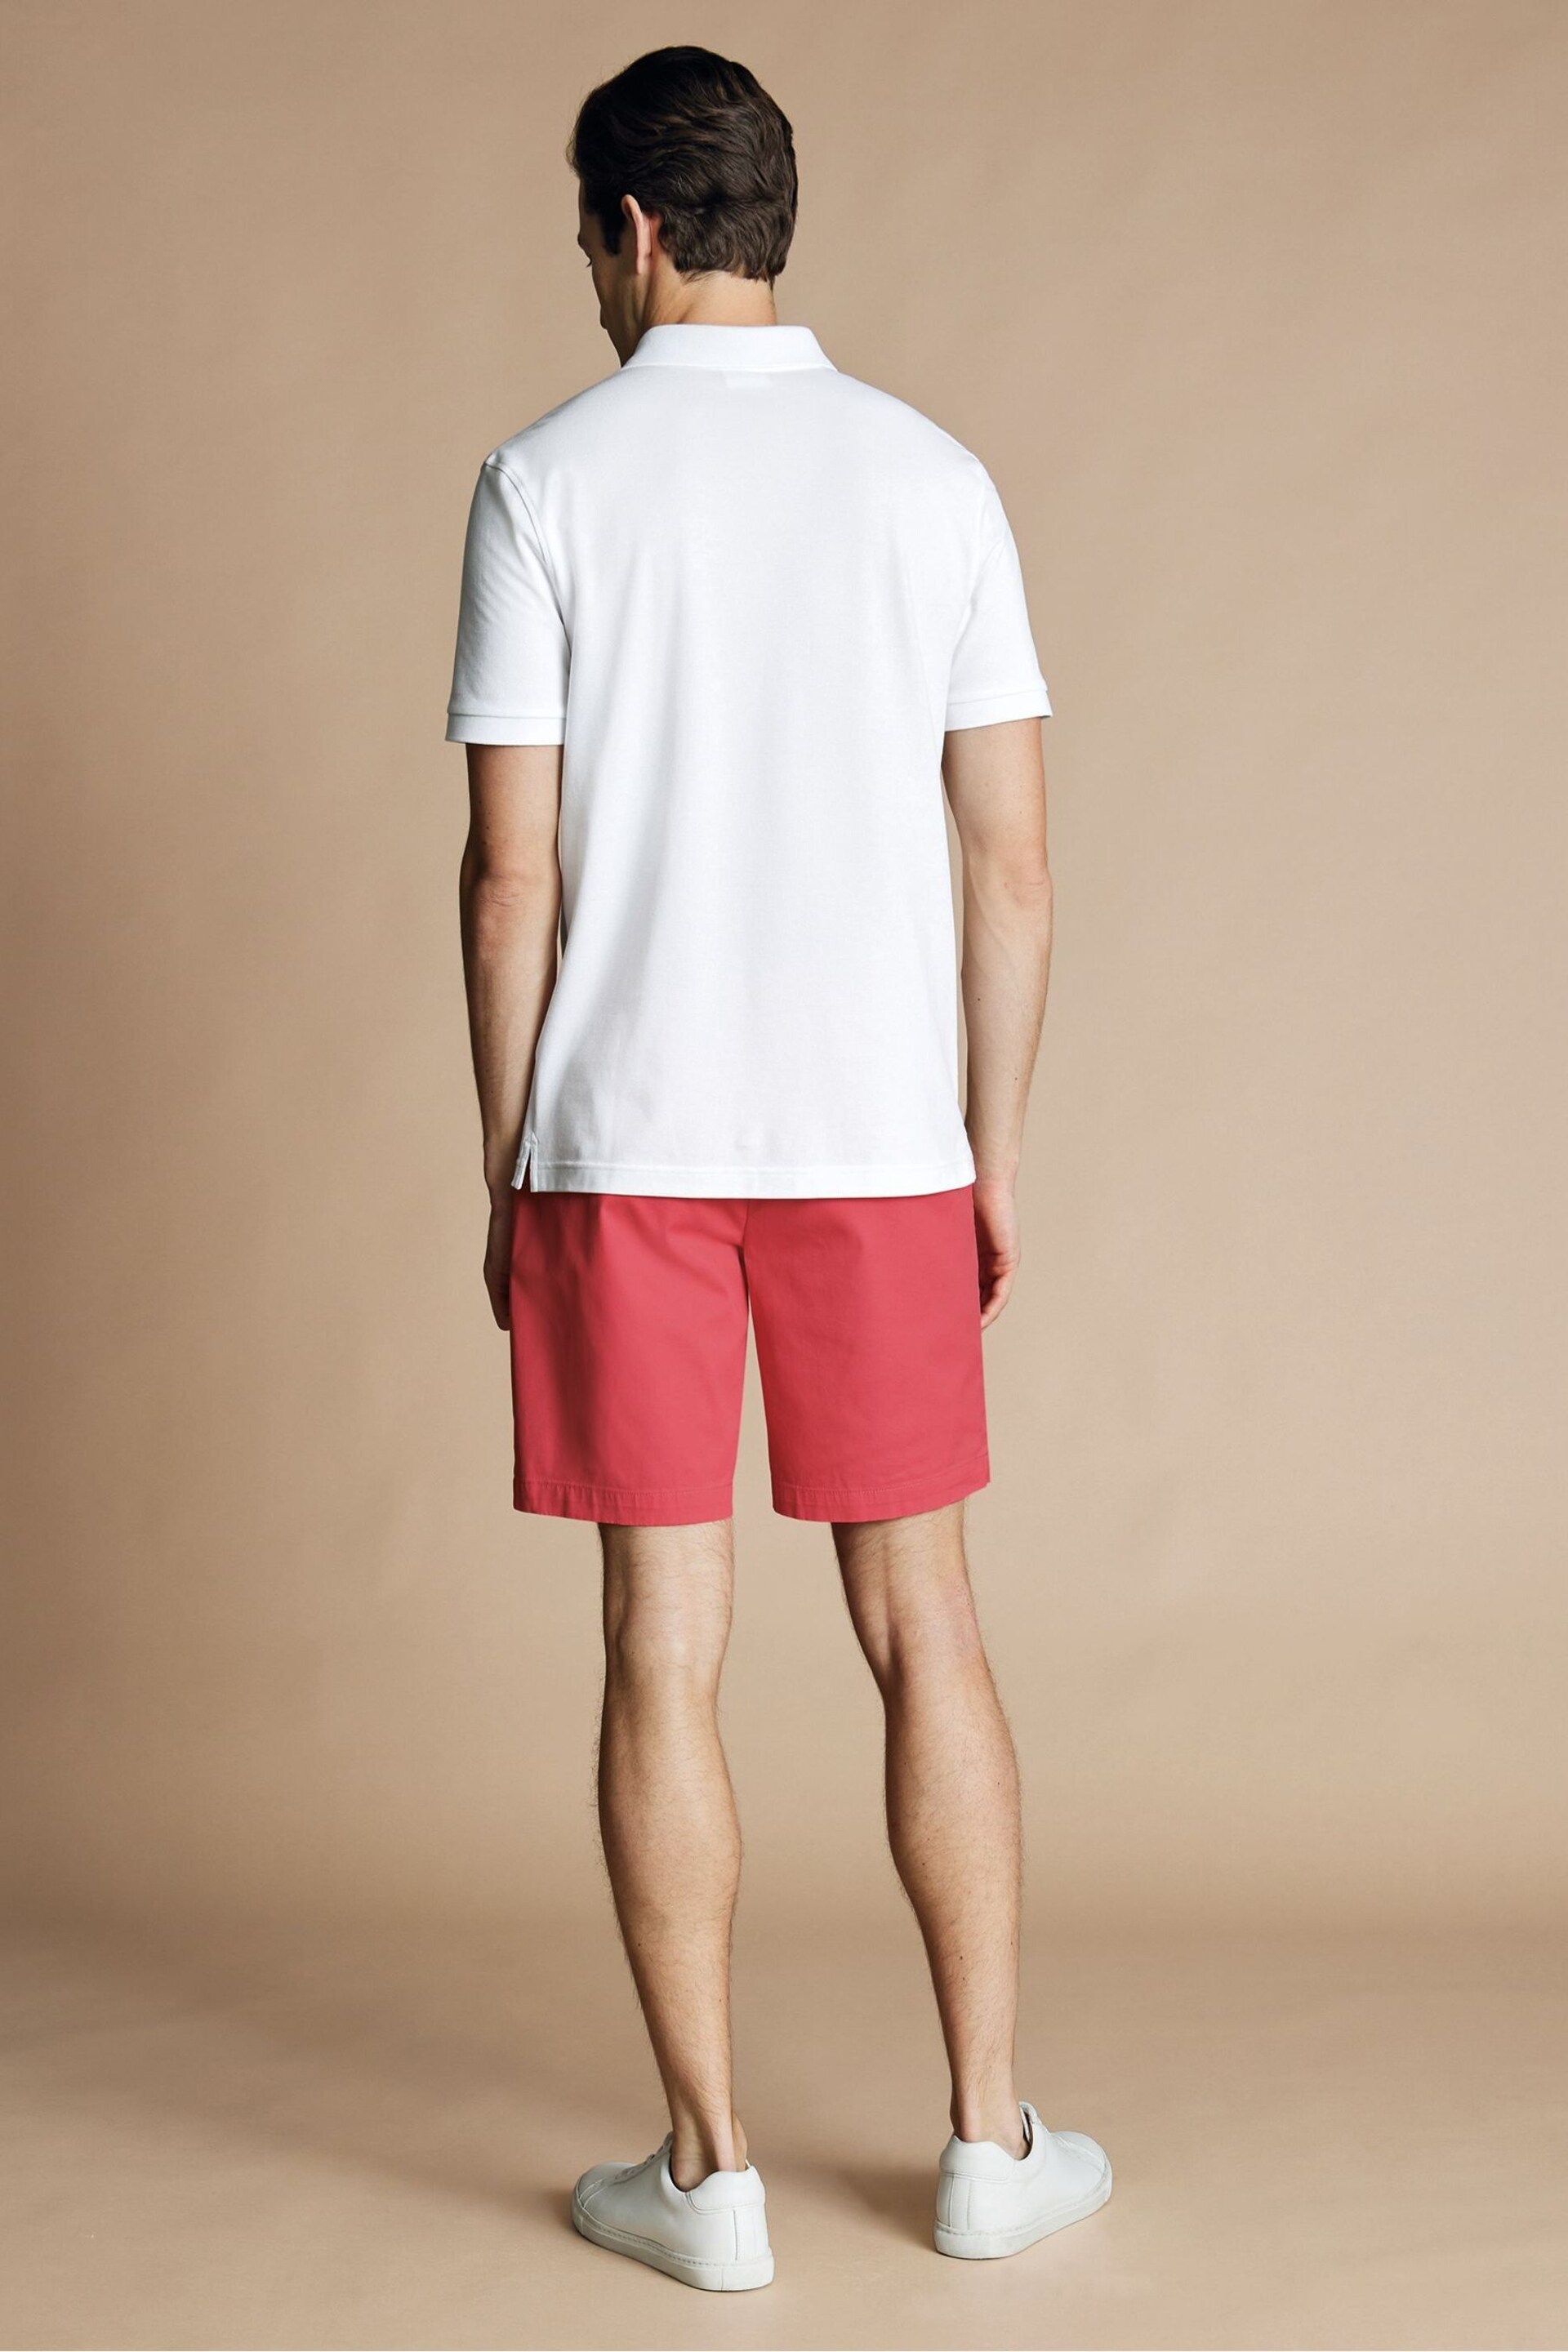 Charles Tyrwhitt Pink Cotton Shorts - Image 4 of 6